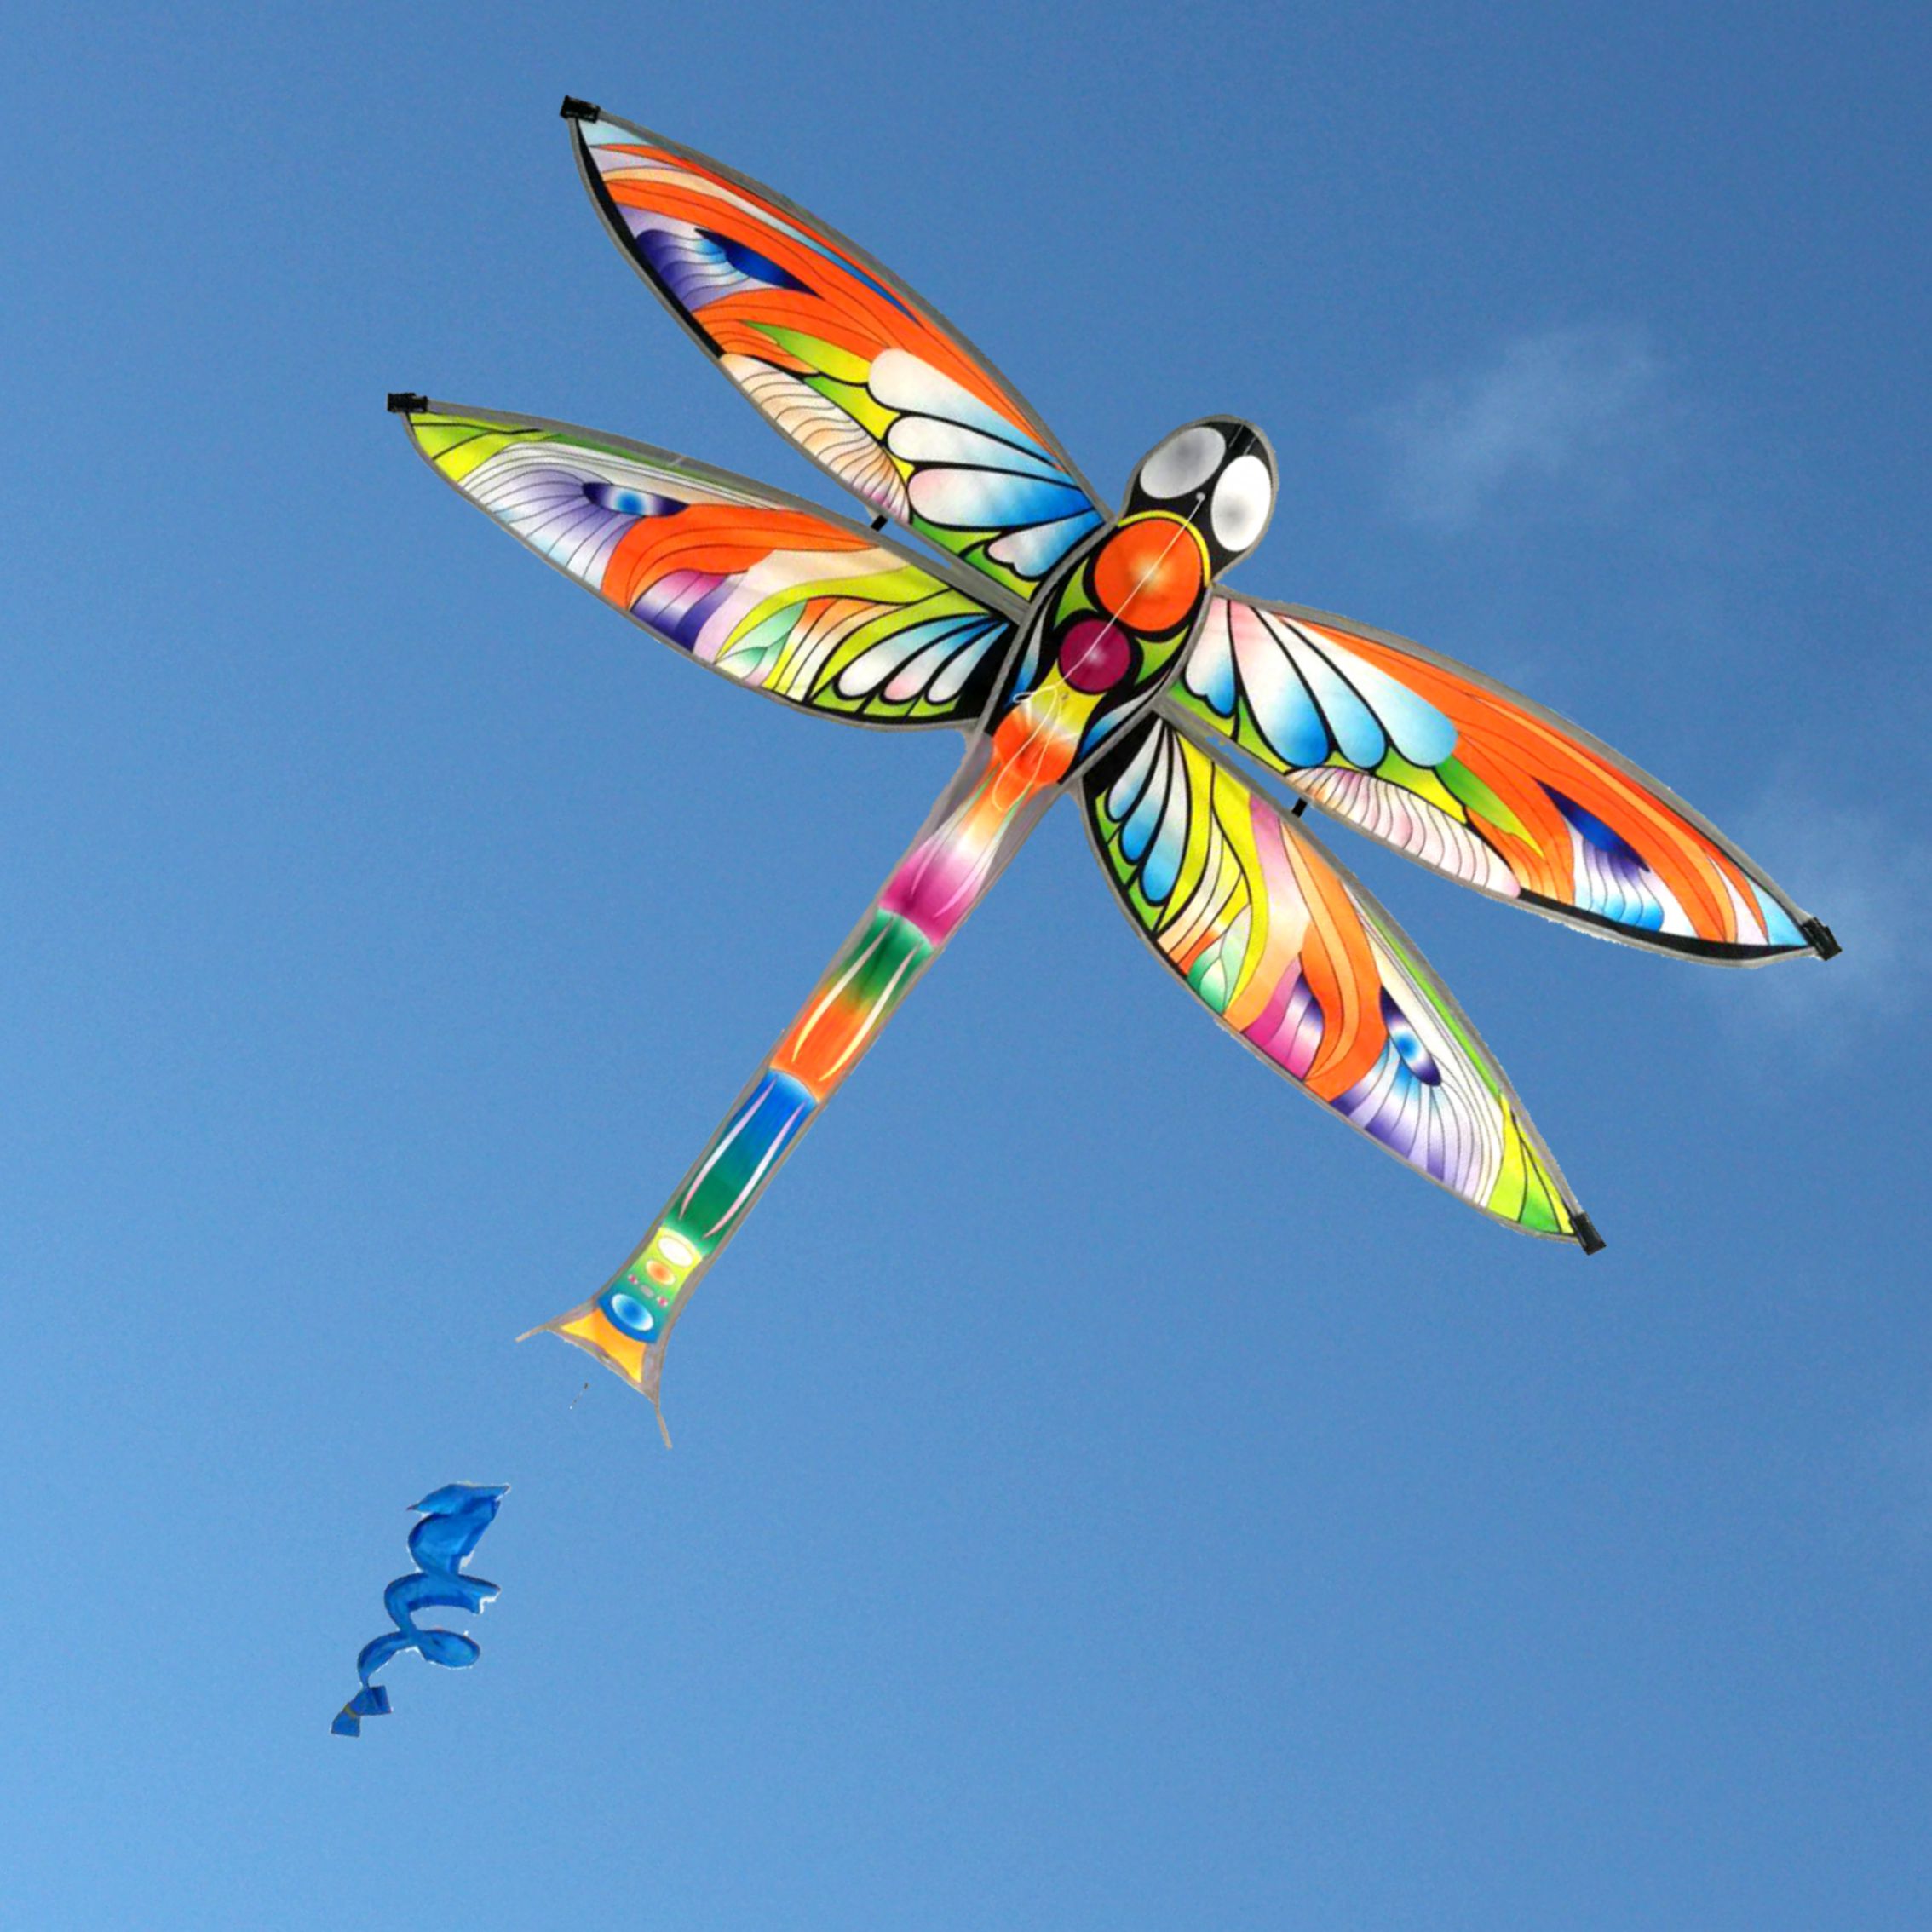 Dragonfly single string kite